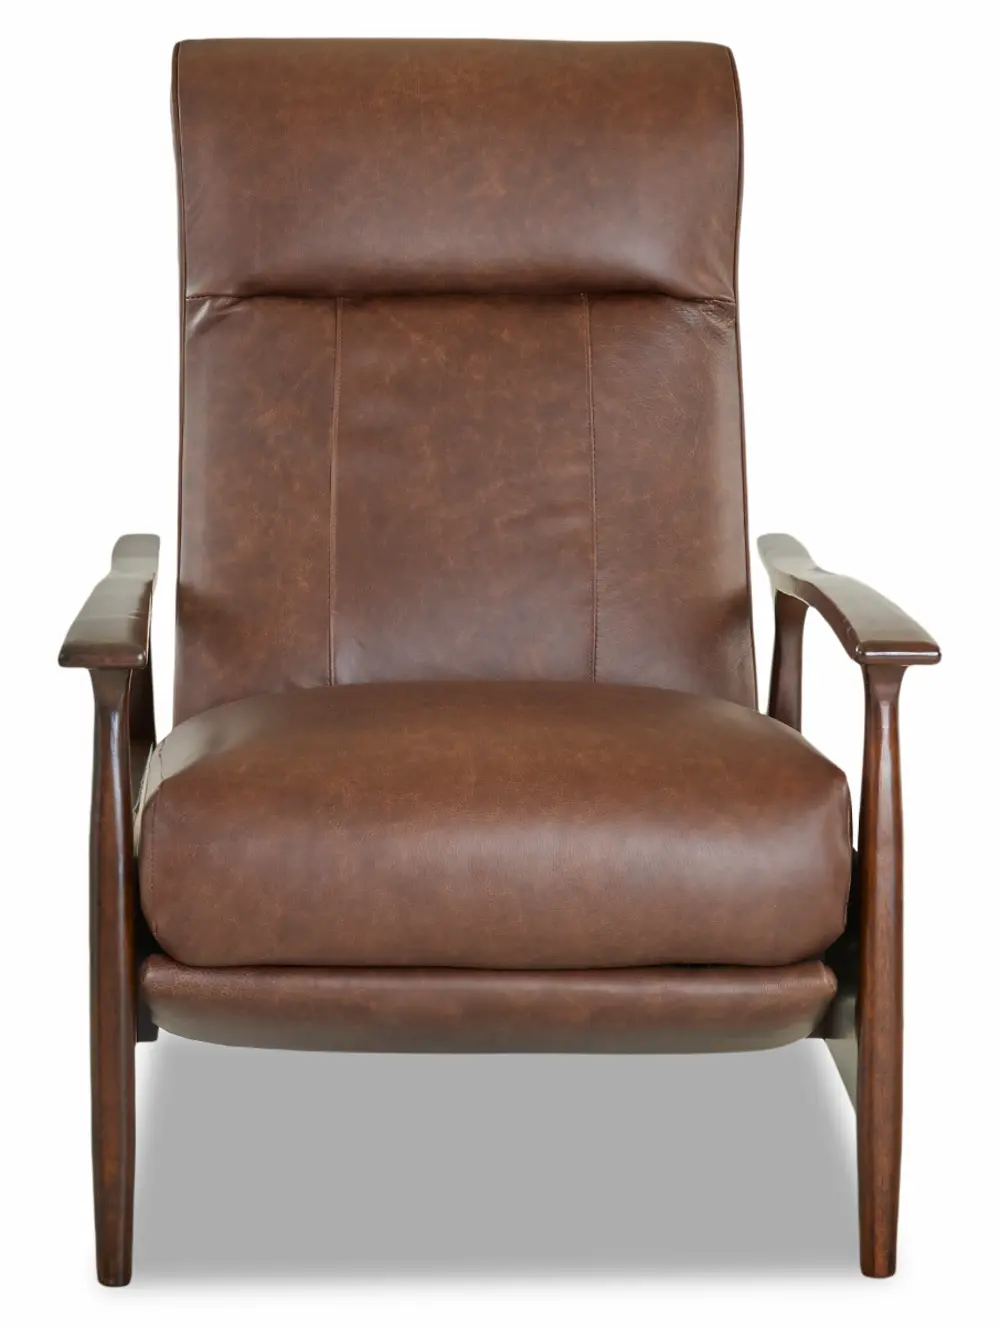 CLP691HLRCBRONXSOD Sod Brown Leather High Leg Recliner - Comfort-1